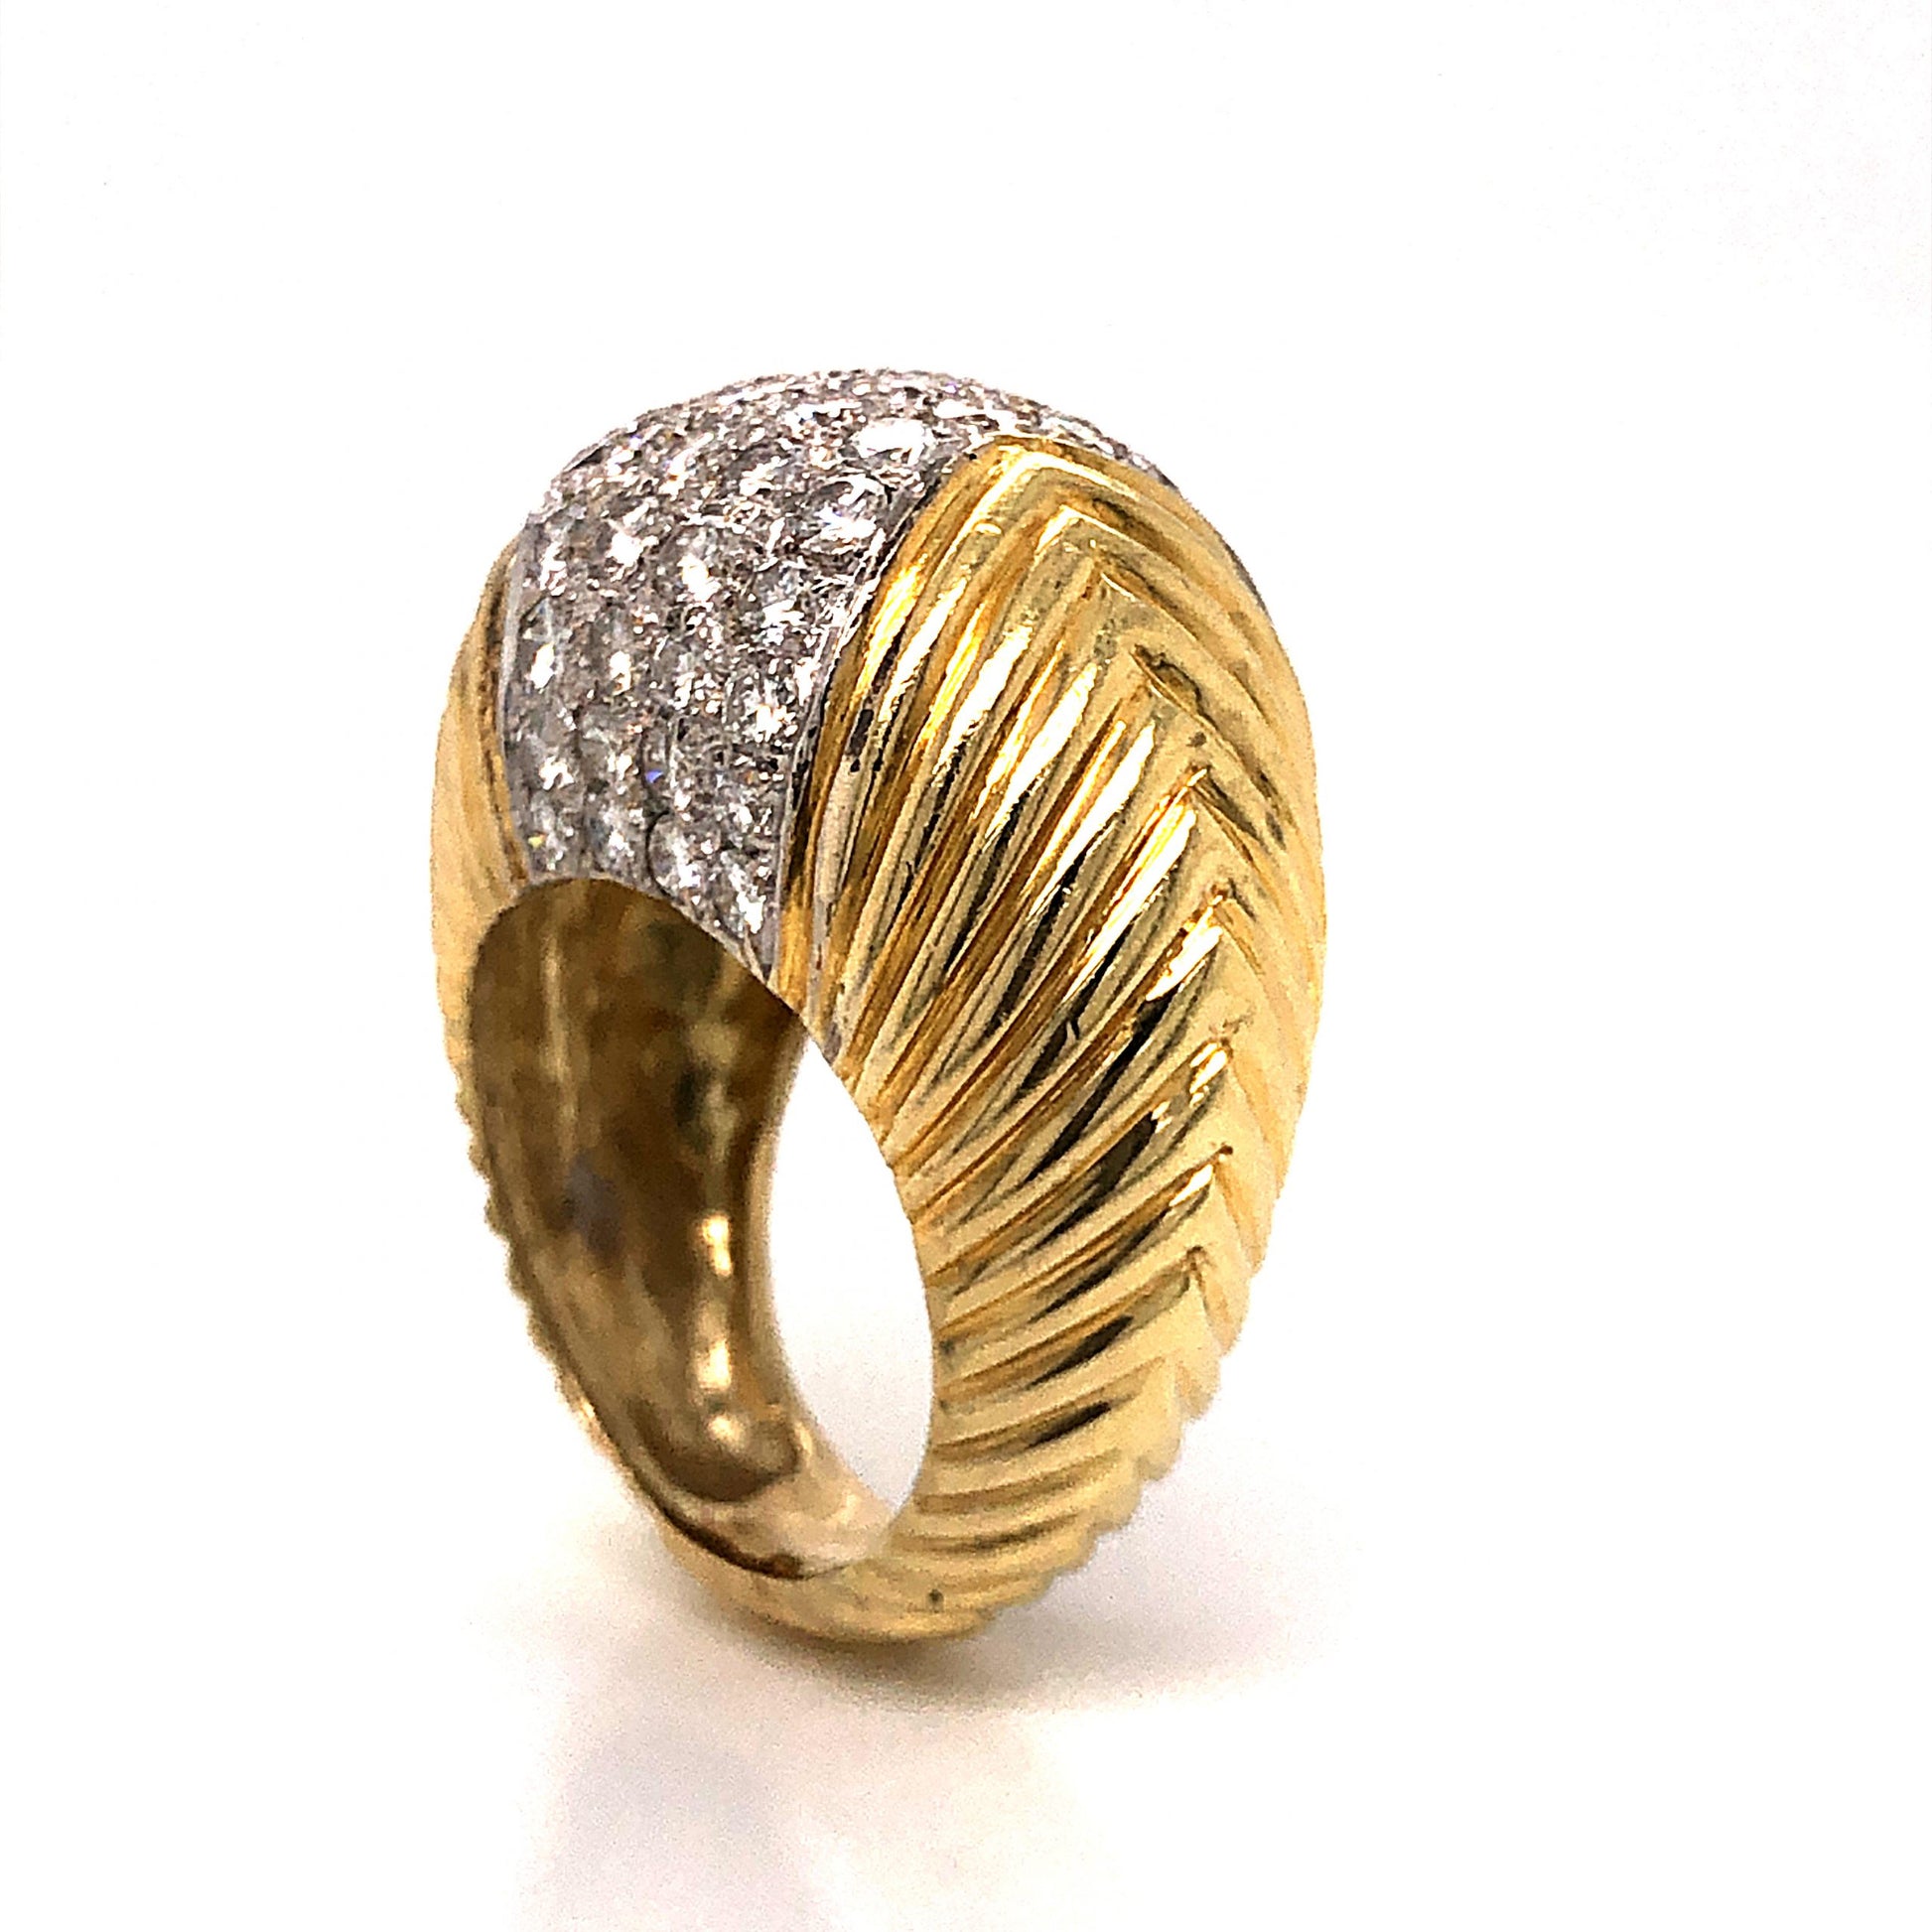 Textured Pave Diamond Cocktail Ring 18k Yellow GoldComposition: 18 Karat White Gold/18 Karat Yellow Gold Ring Size: 8.75 Total Diamond Weight: 3.30ct Total Gram Weight: 25.75 g